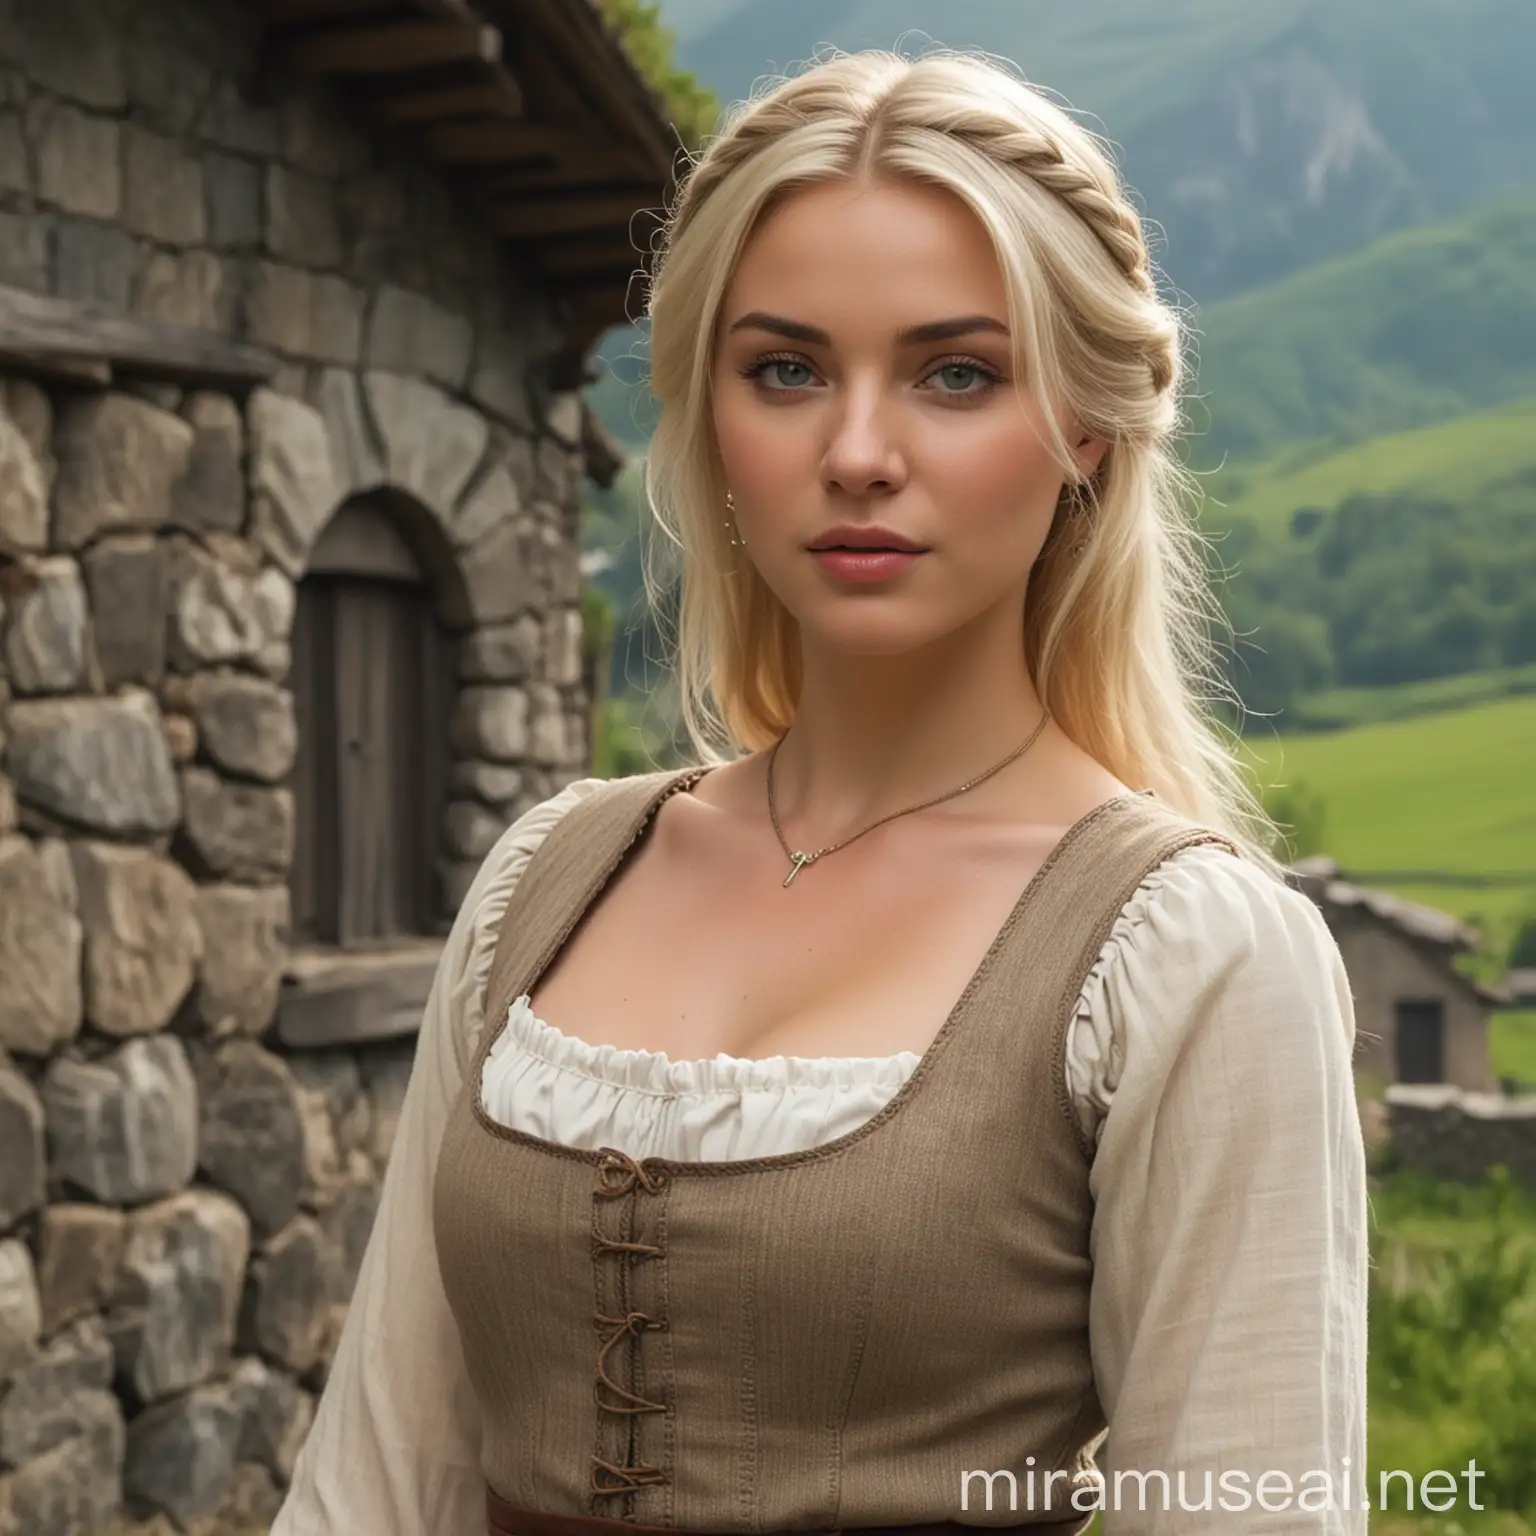 Blonde Villager Woman in a Fantasy Movie Scene